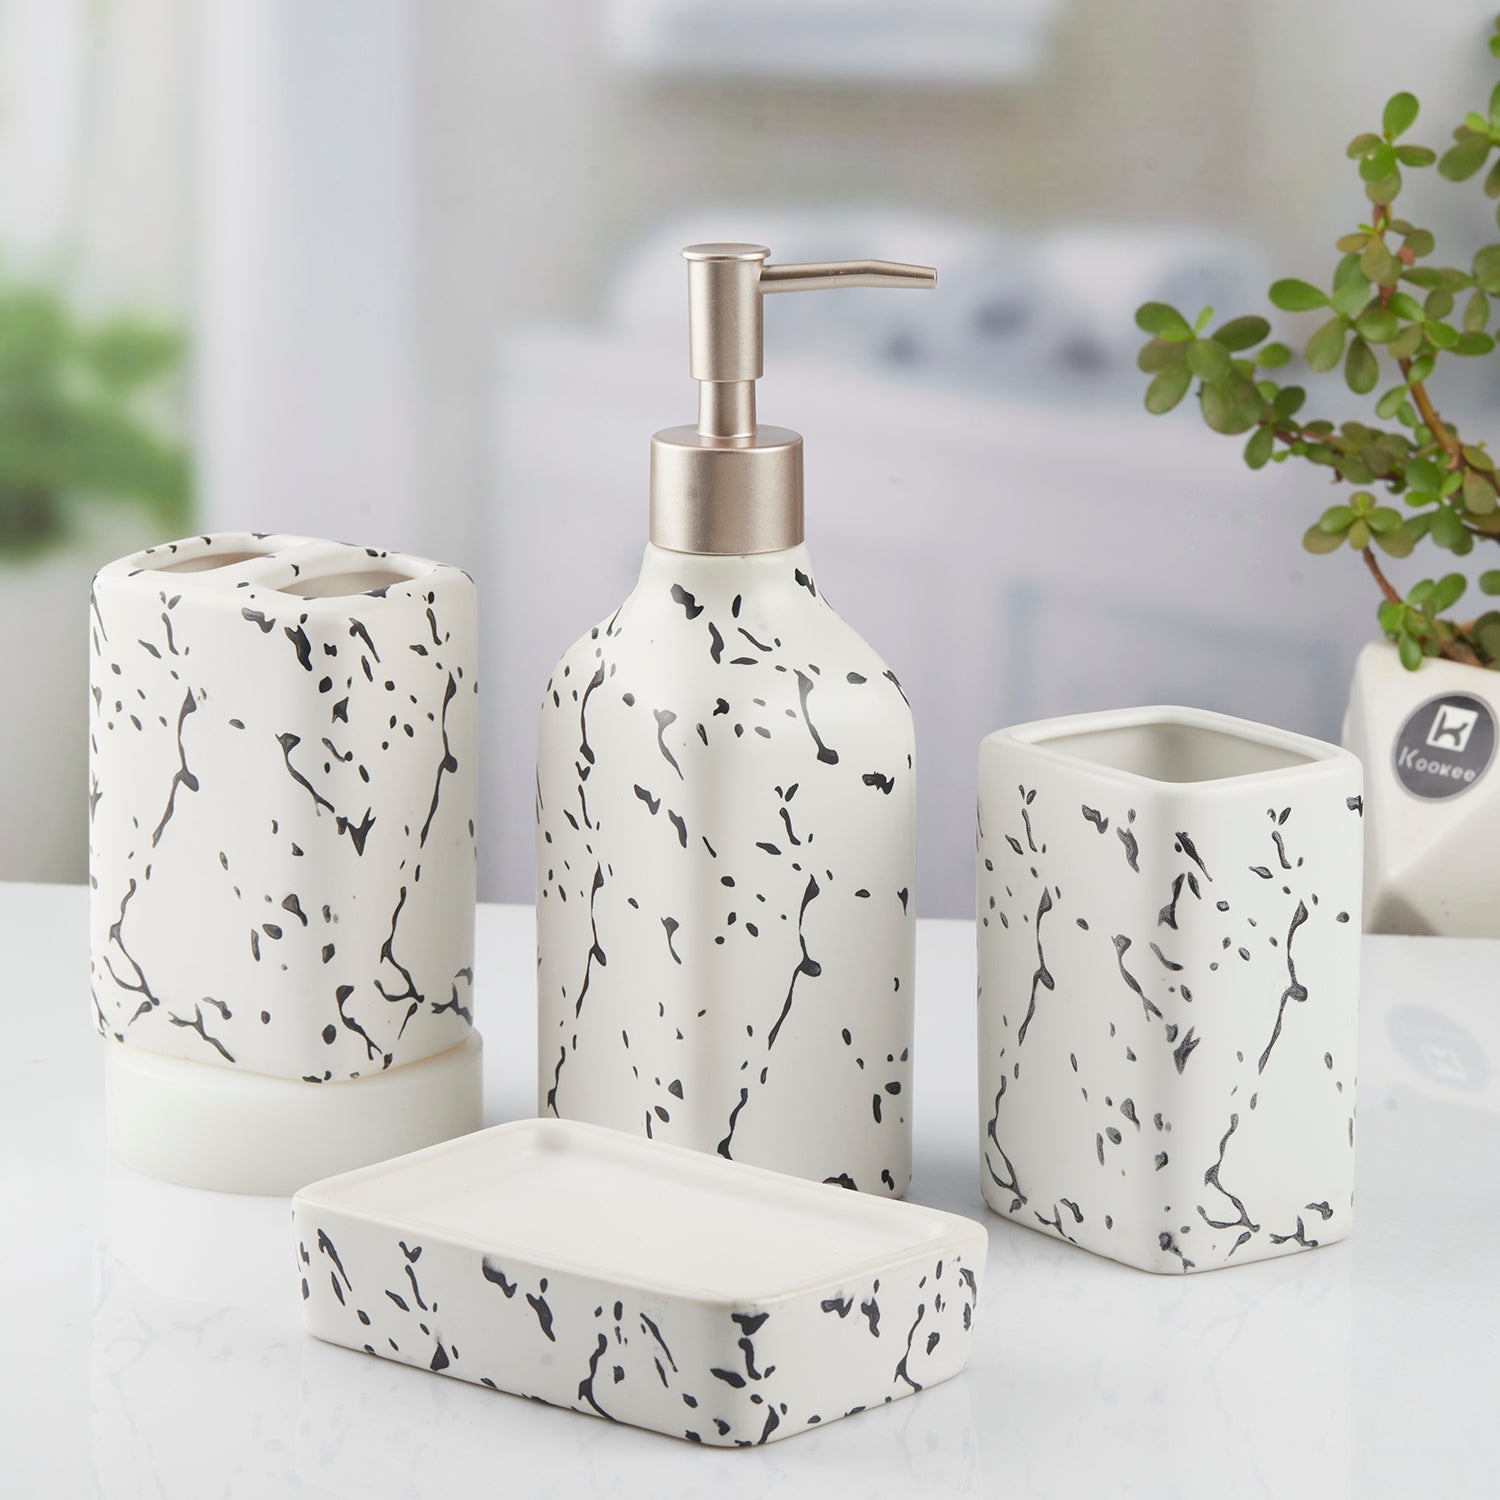 Ceramic Bathroom Set of 4 with Soap Dispenser (10445)